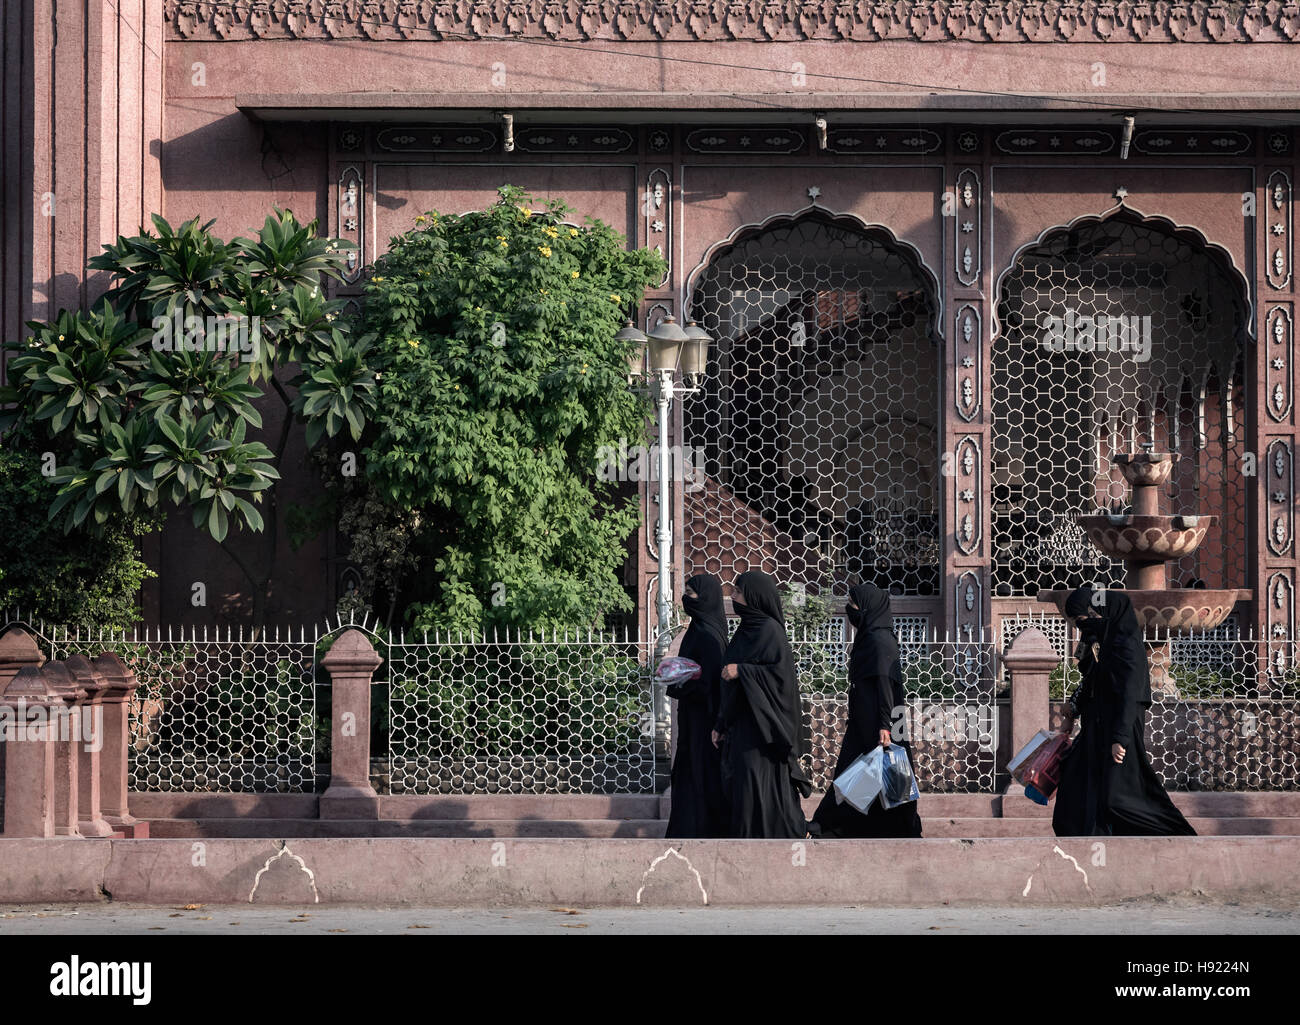 Women in Burqa in  Peshawar Bazaar of Pakistan. Stock Photo